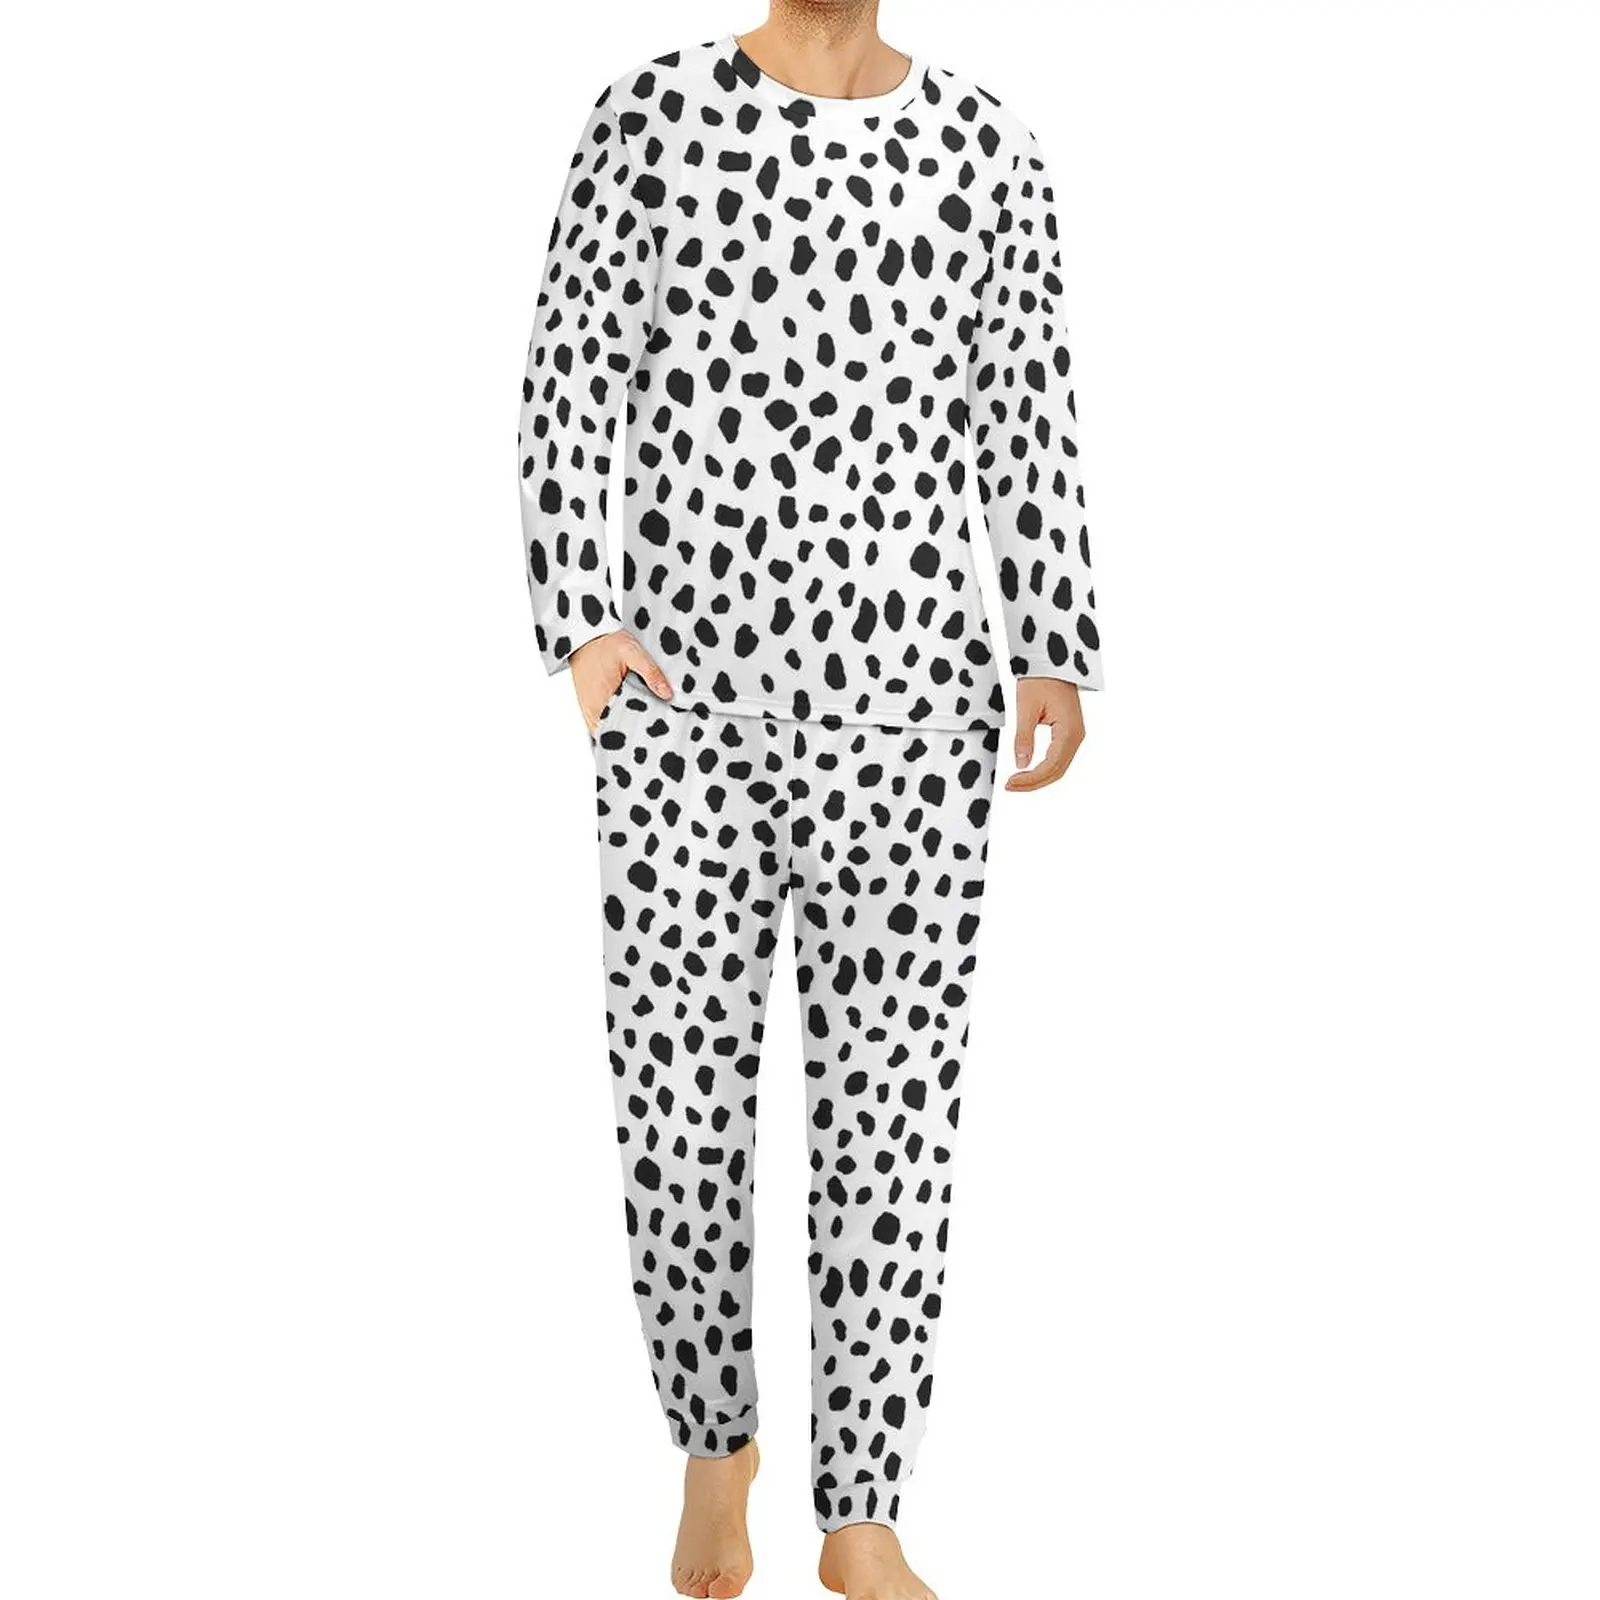 

Dalmatian Pajamas Spring 2 Pieces Spotted Animal Print Romantic Pajama Sets Male Long Sleeve Leisure Sleepwear Big Size 4XL 5XL